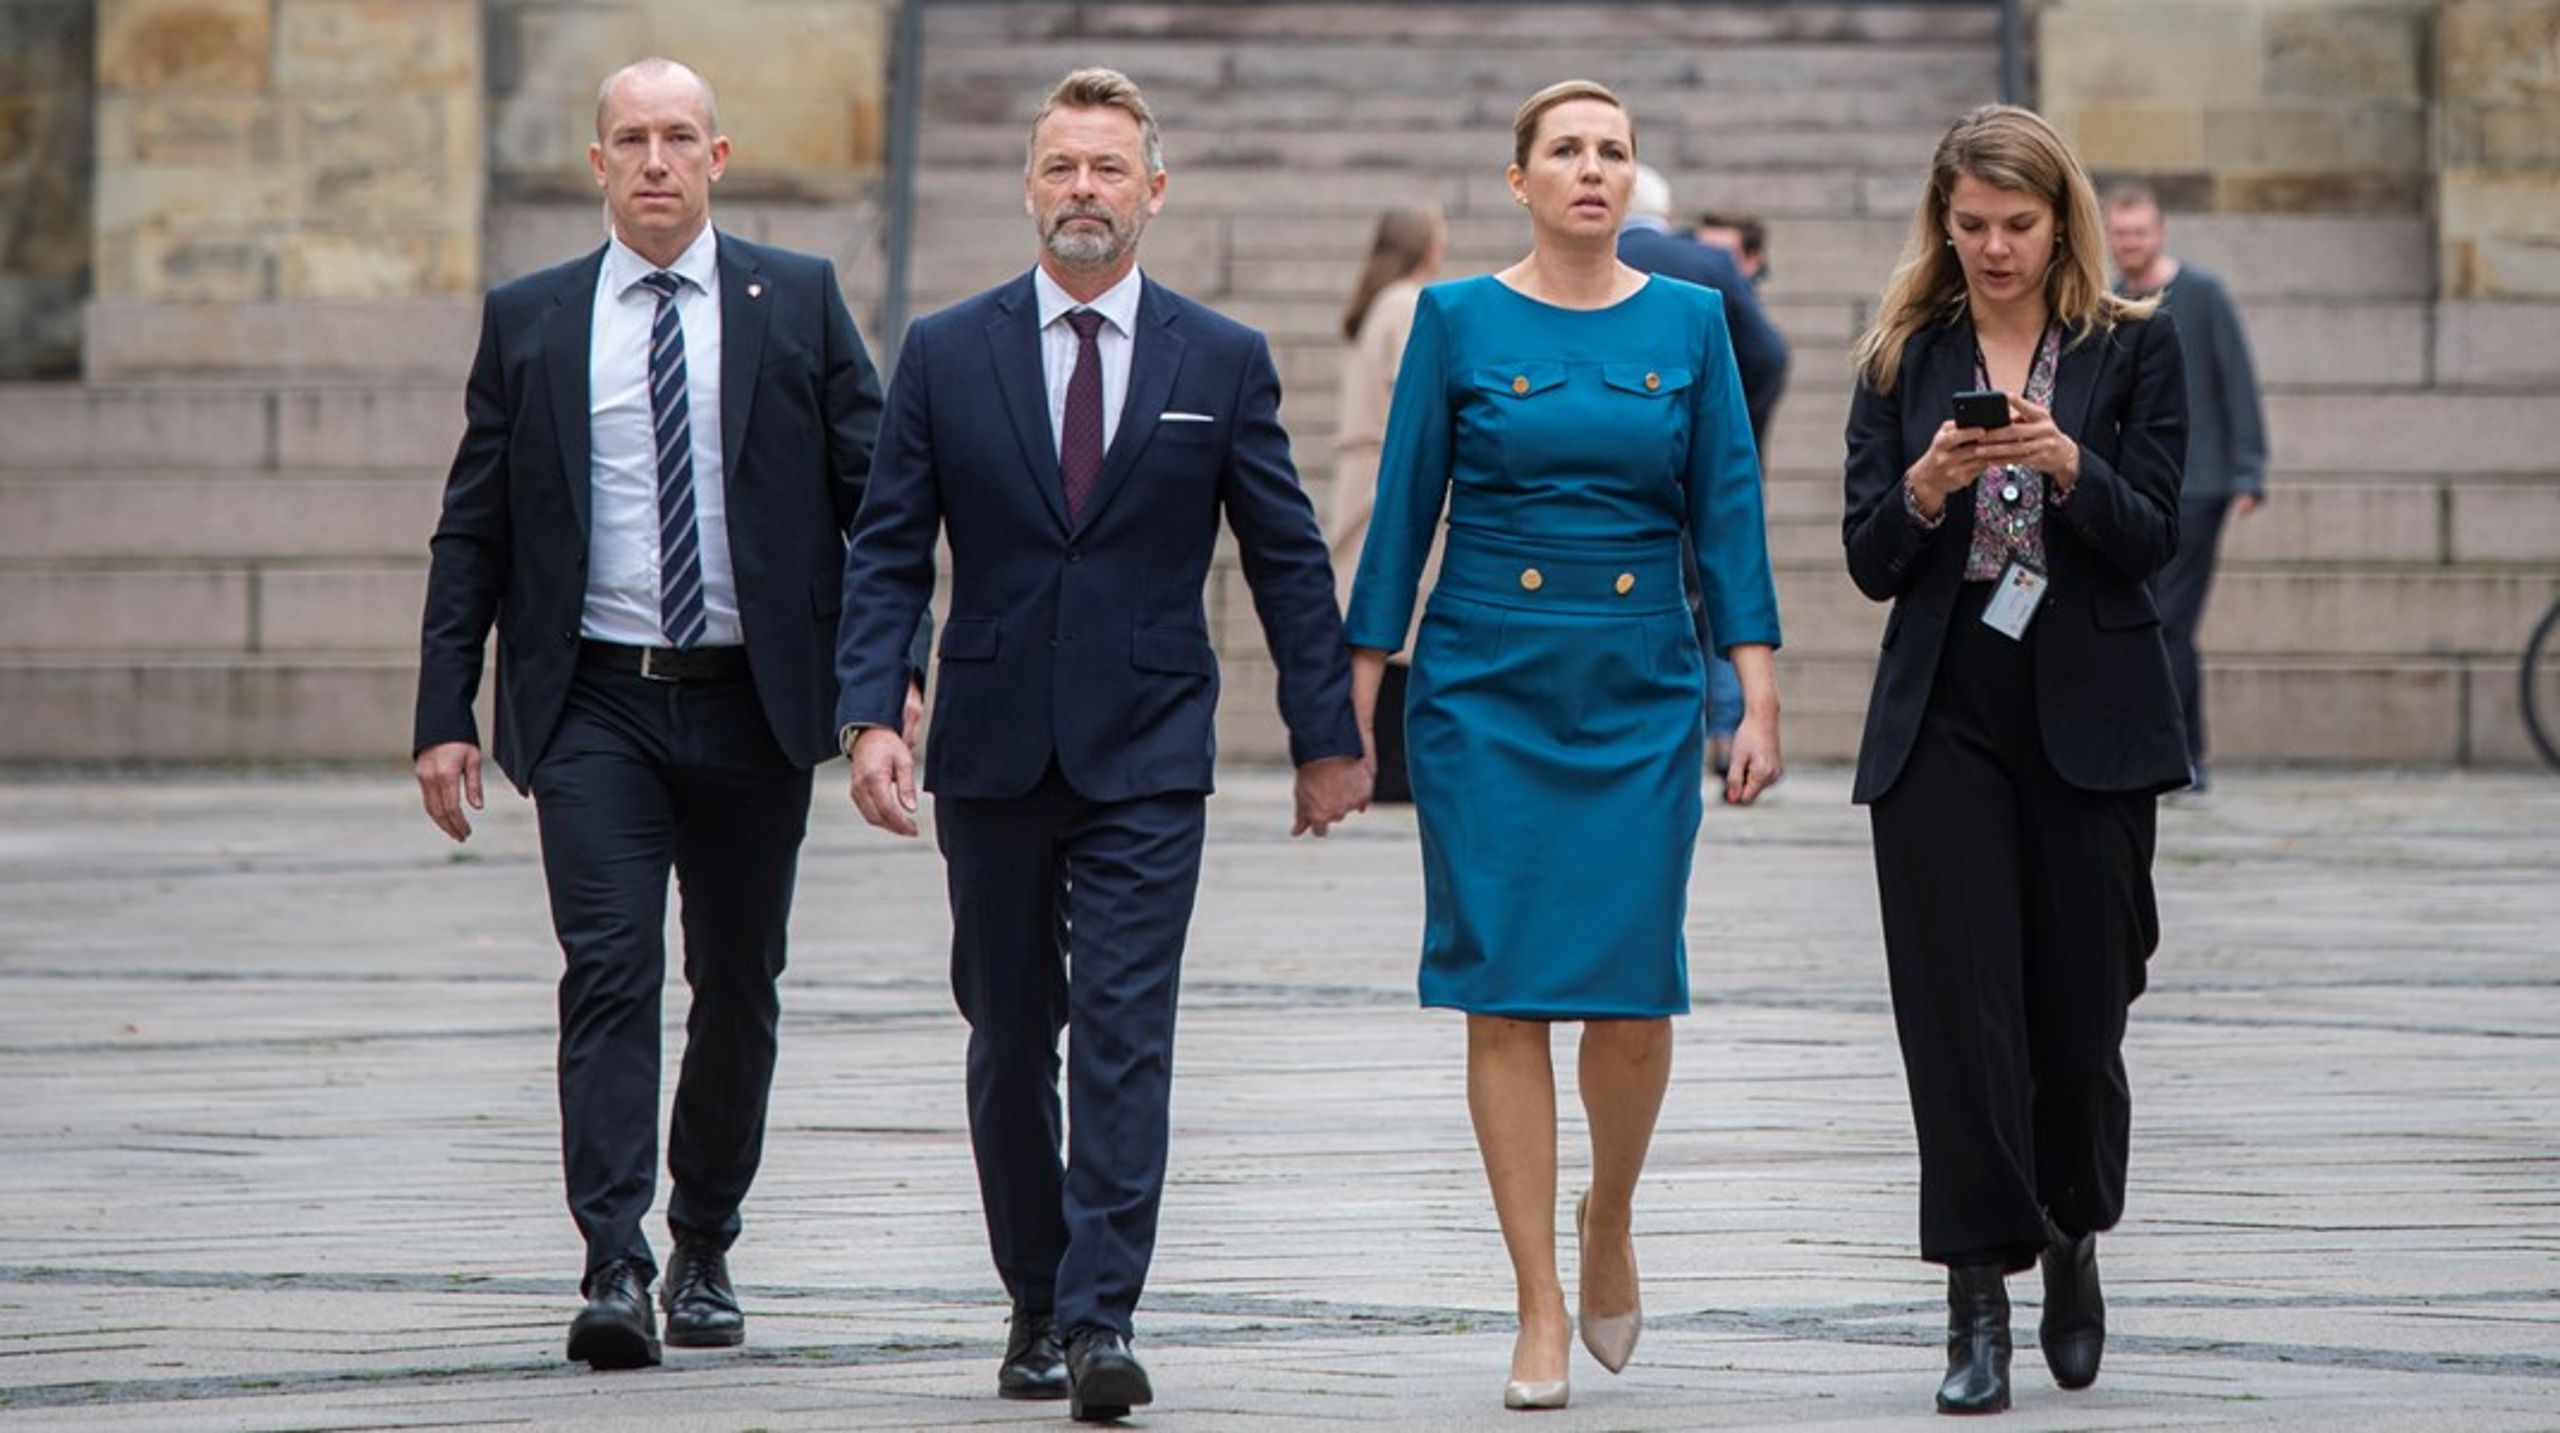 Statsministeren på vej til Christiansborg Slotskirke. Se hele billedserien fra Folketingets åbning tirsdag og åbningsdebatten torsdag.